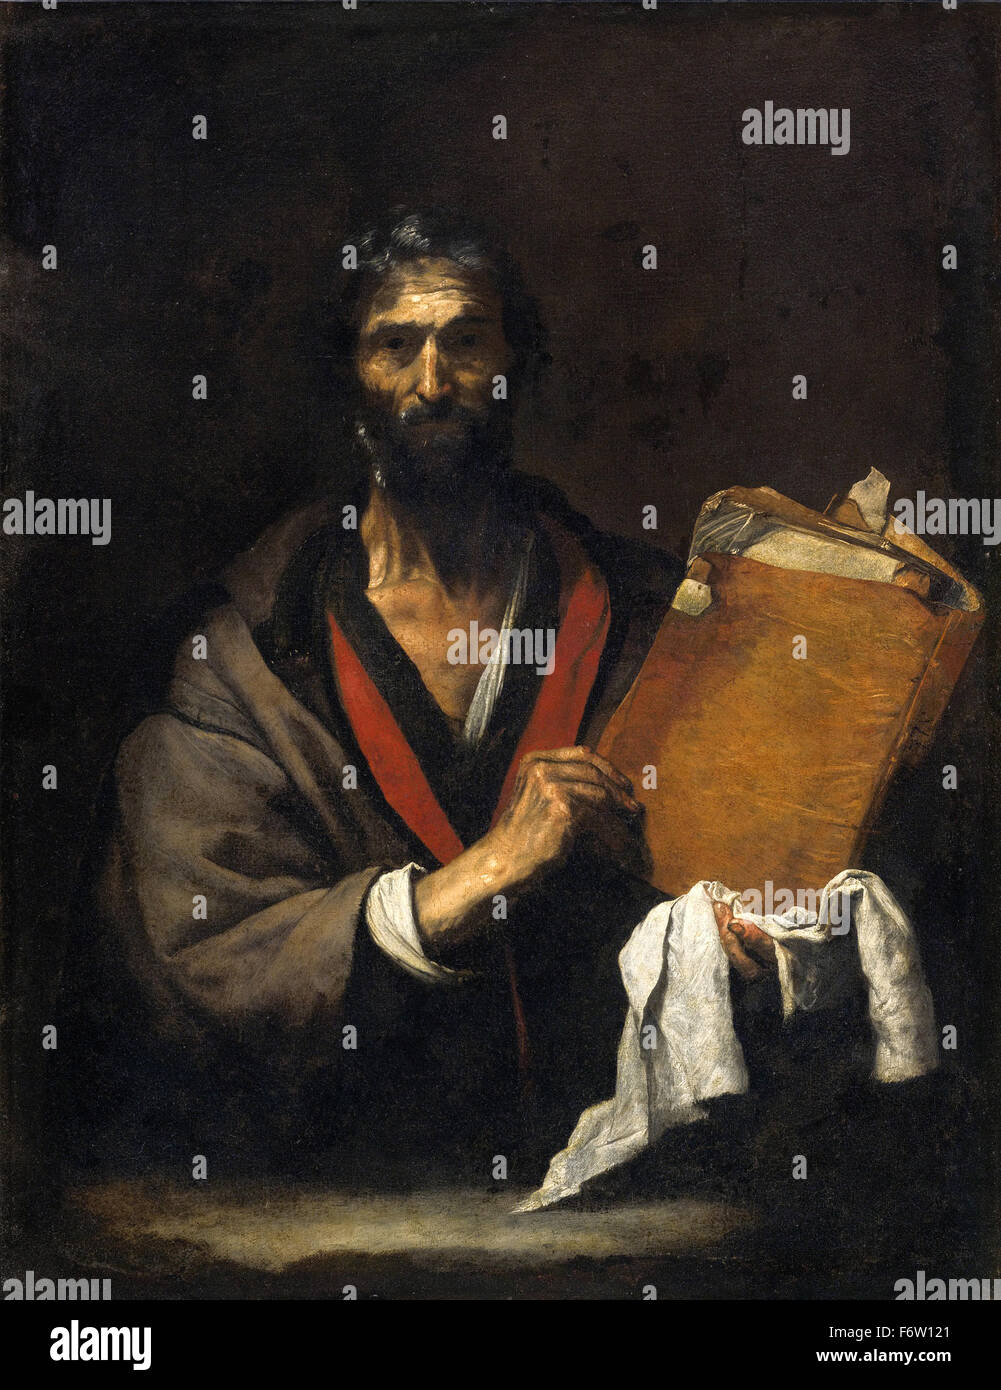 Jusepe de Ribera - A Philosopher Stock Photo